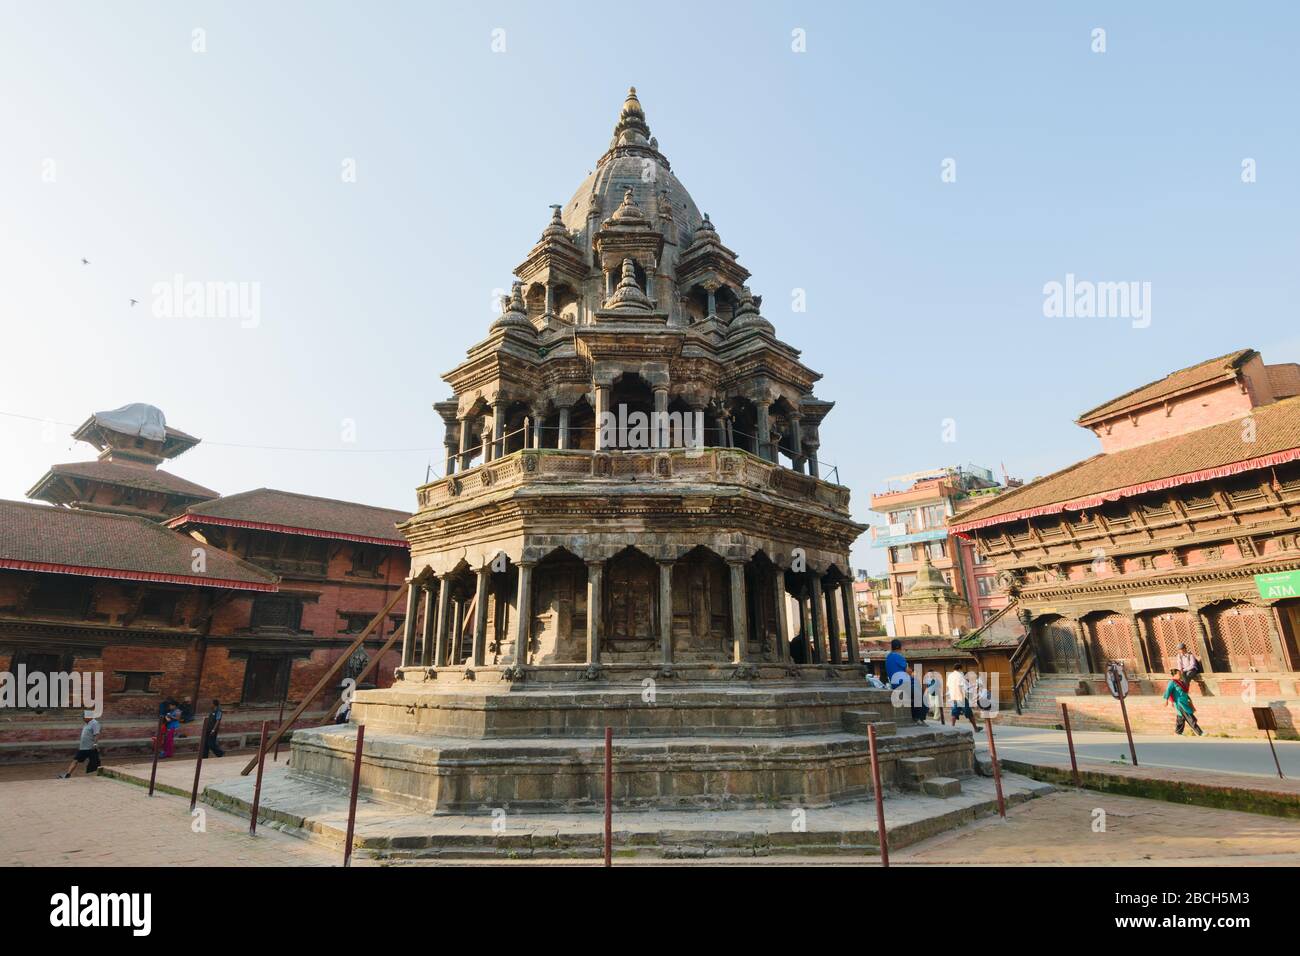 PATAN, NEPAL - 29 Jul 2015: Octagonal Krishna temple Chyasin Dega built by Pratap Malla in Patan Durbar Square, Nepal Stock Photo